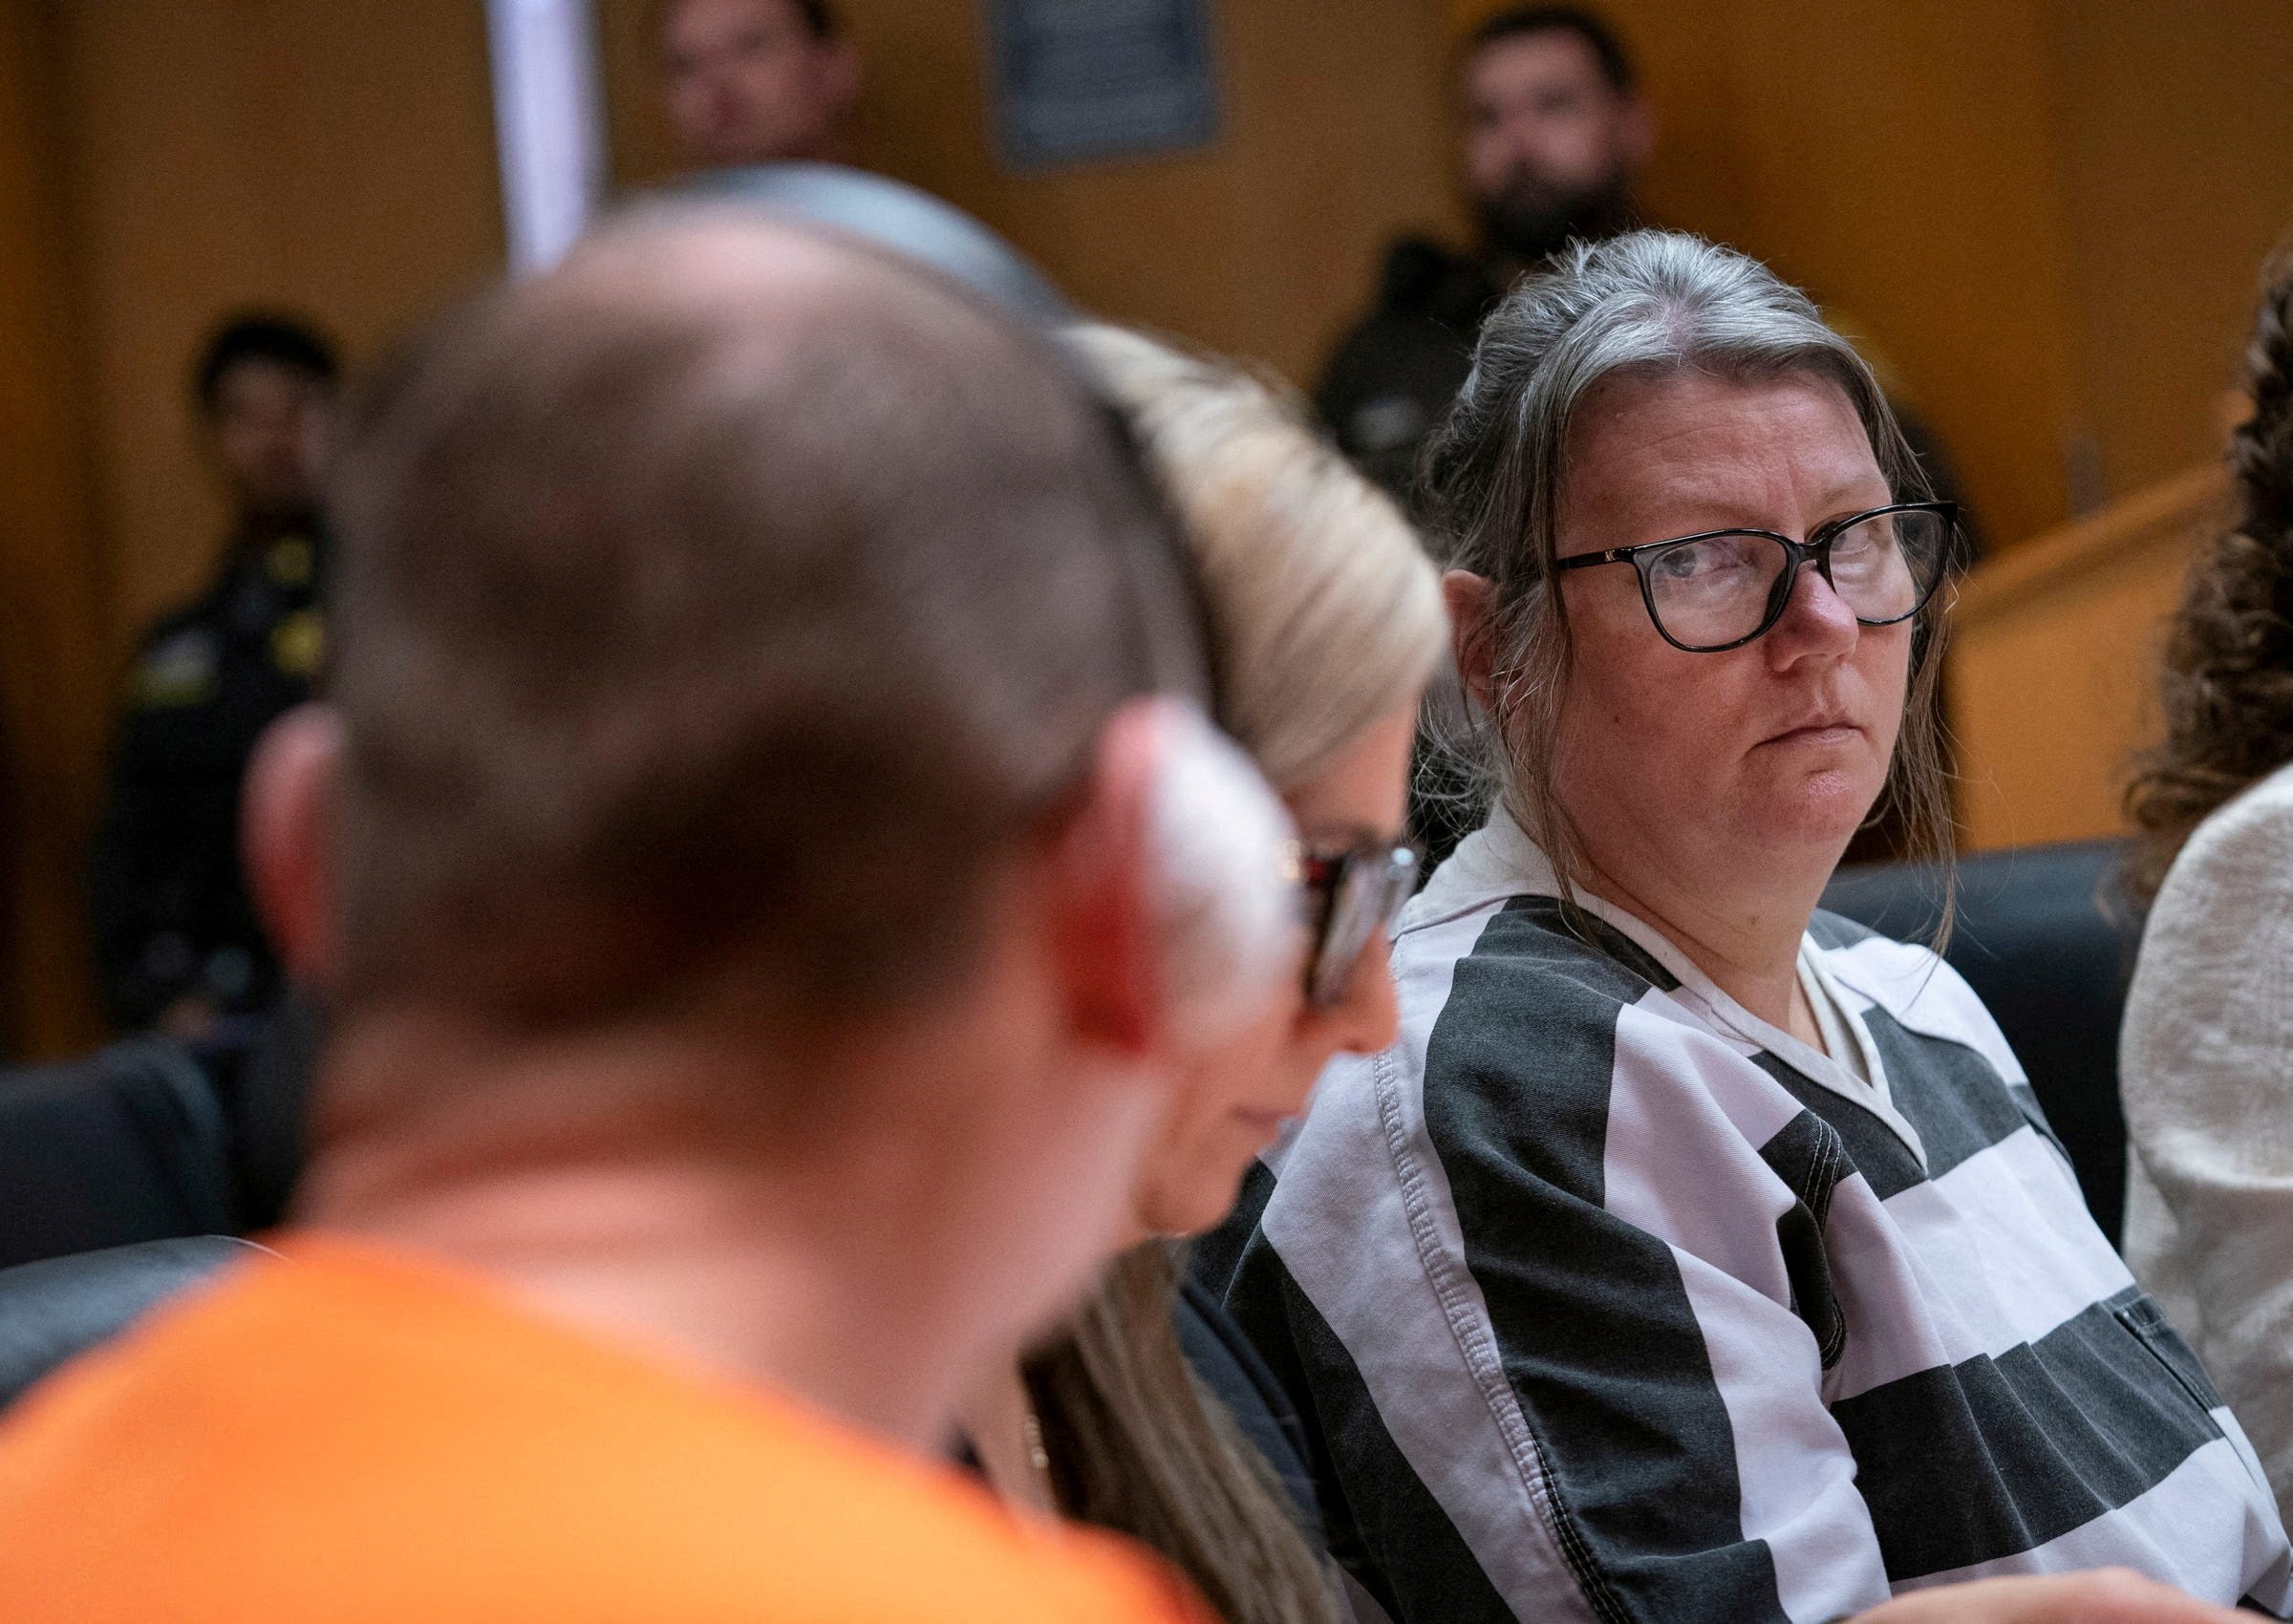 Jennifer Crumbley glances at her husband James Crumbley during their sentencing hearing. Photo: Reuters